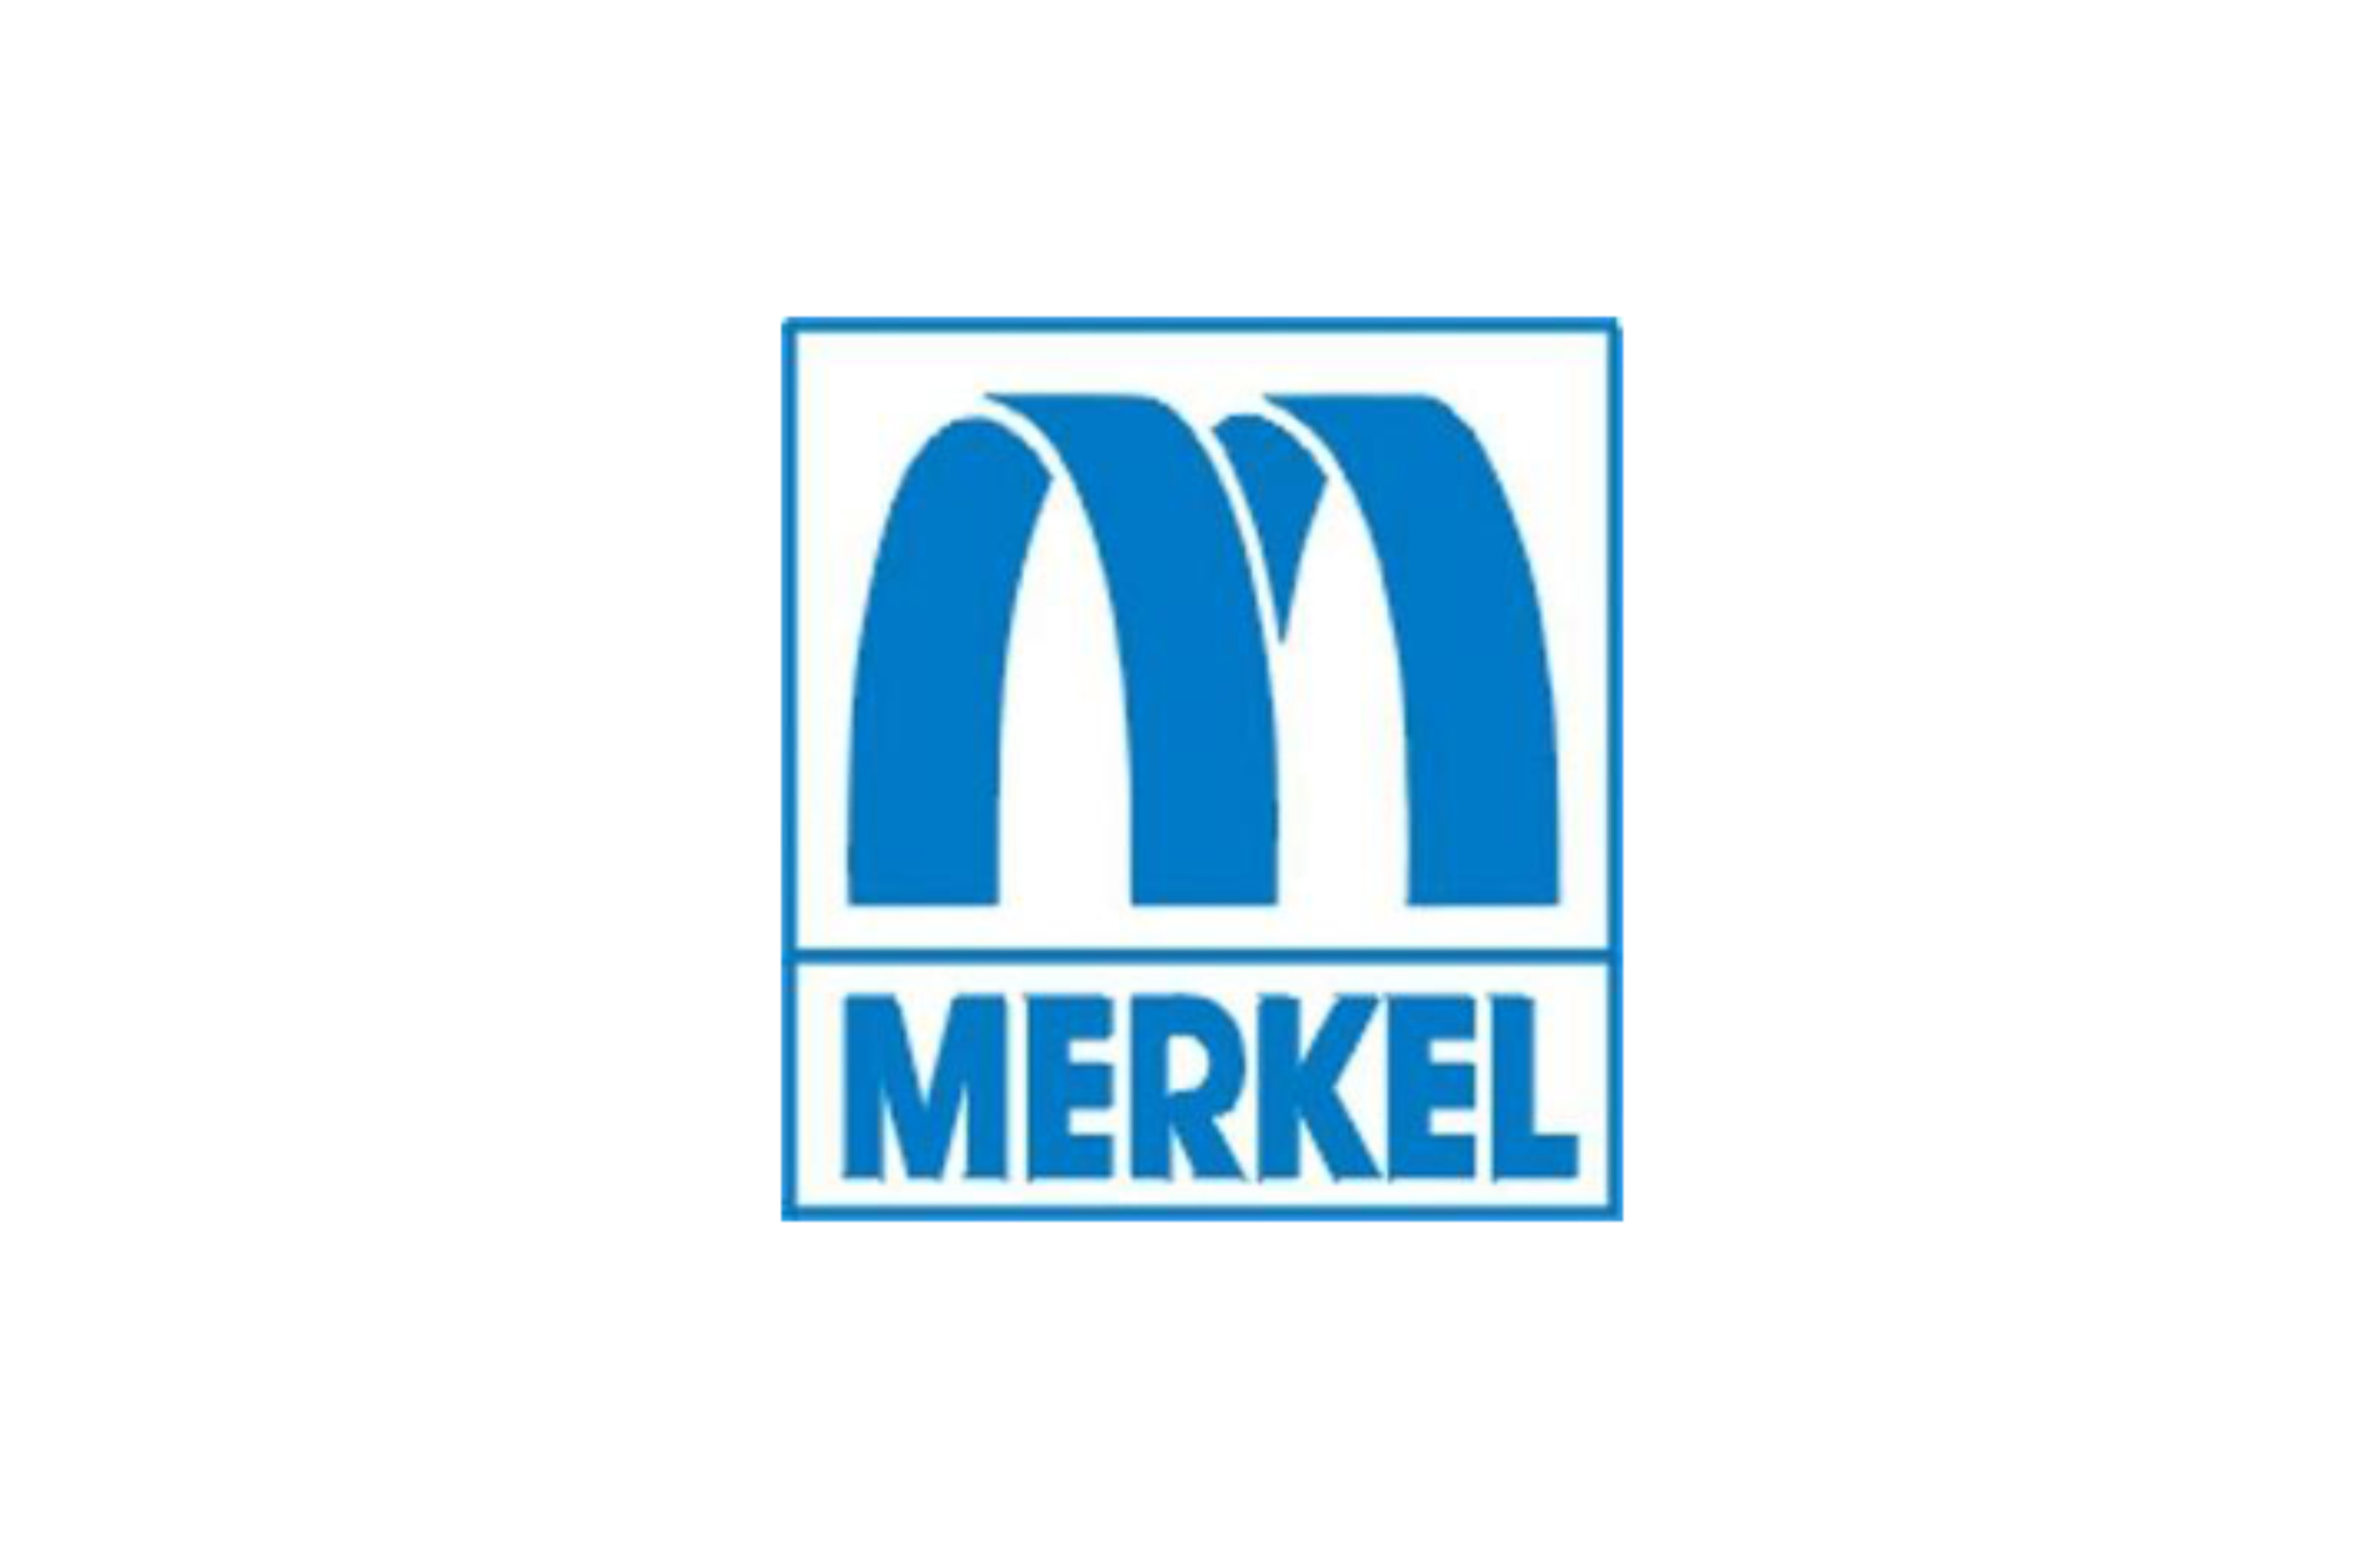 The brands MERKEL